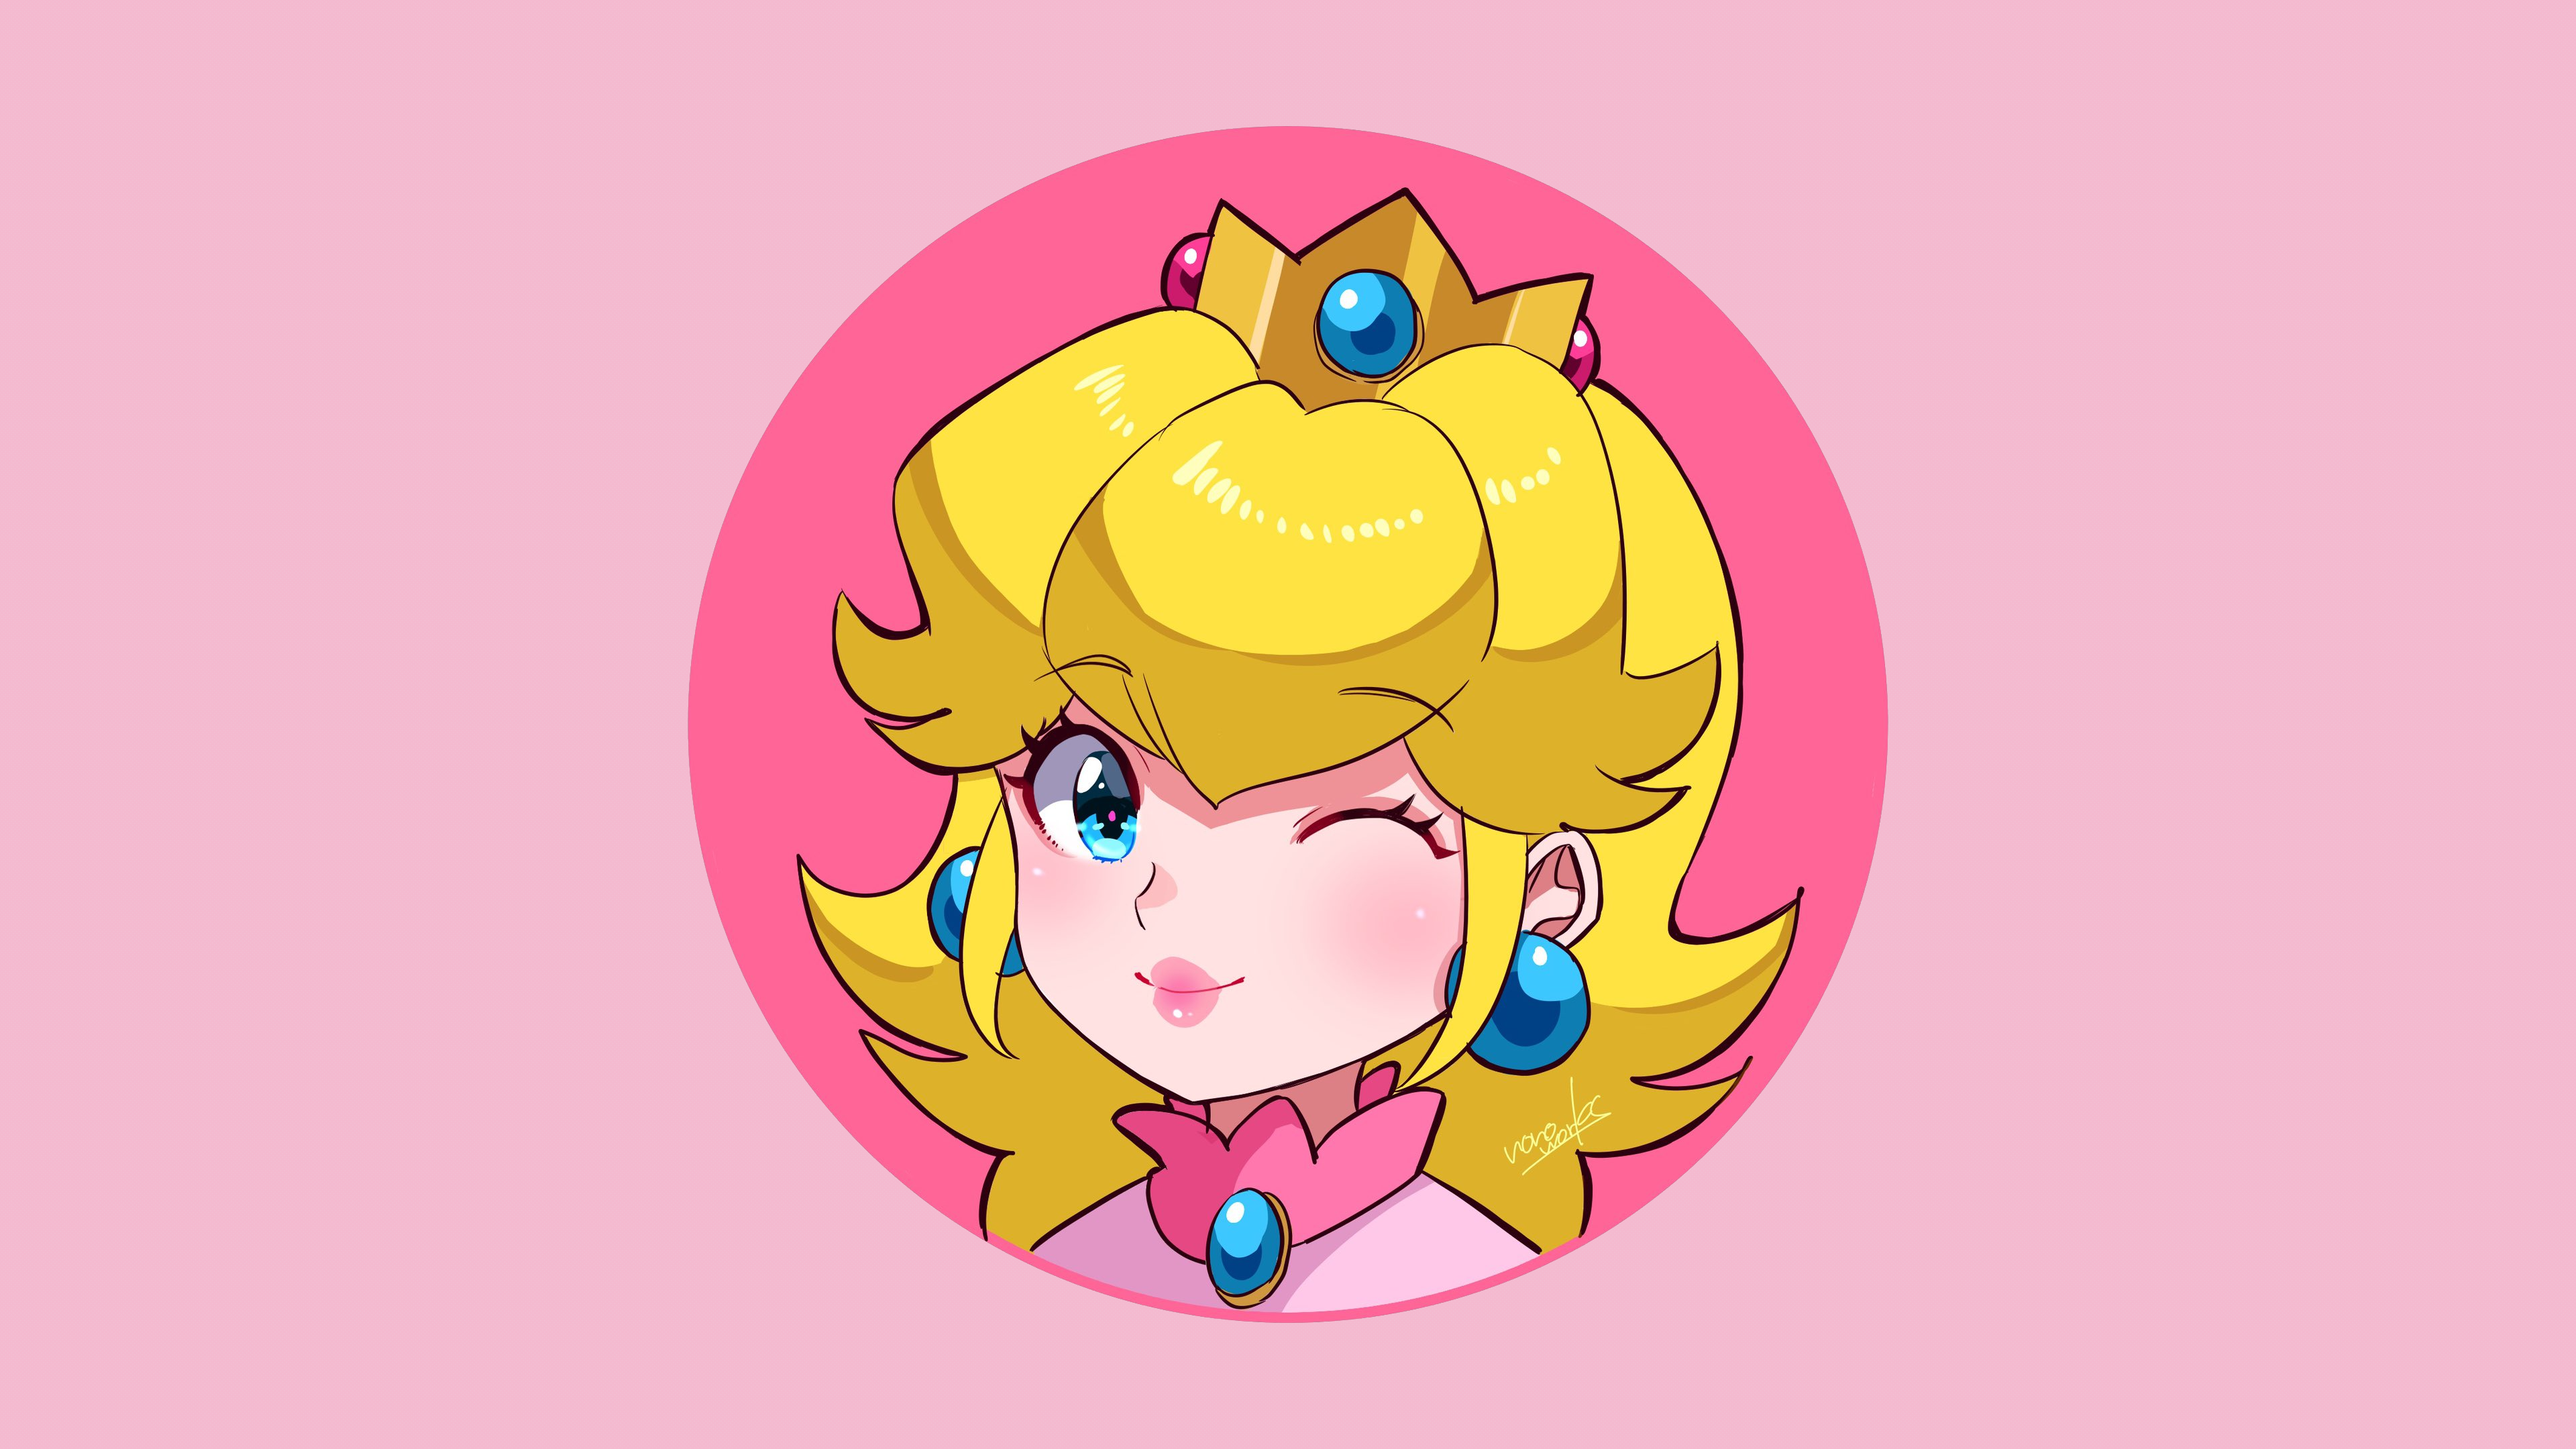 Simple Background Nintendo Princess Peach Super Mario Wink Blue Eyes Blonde Shoulder Length Hair Cro 3840x2160